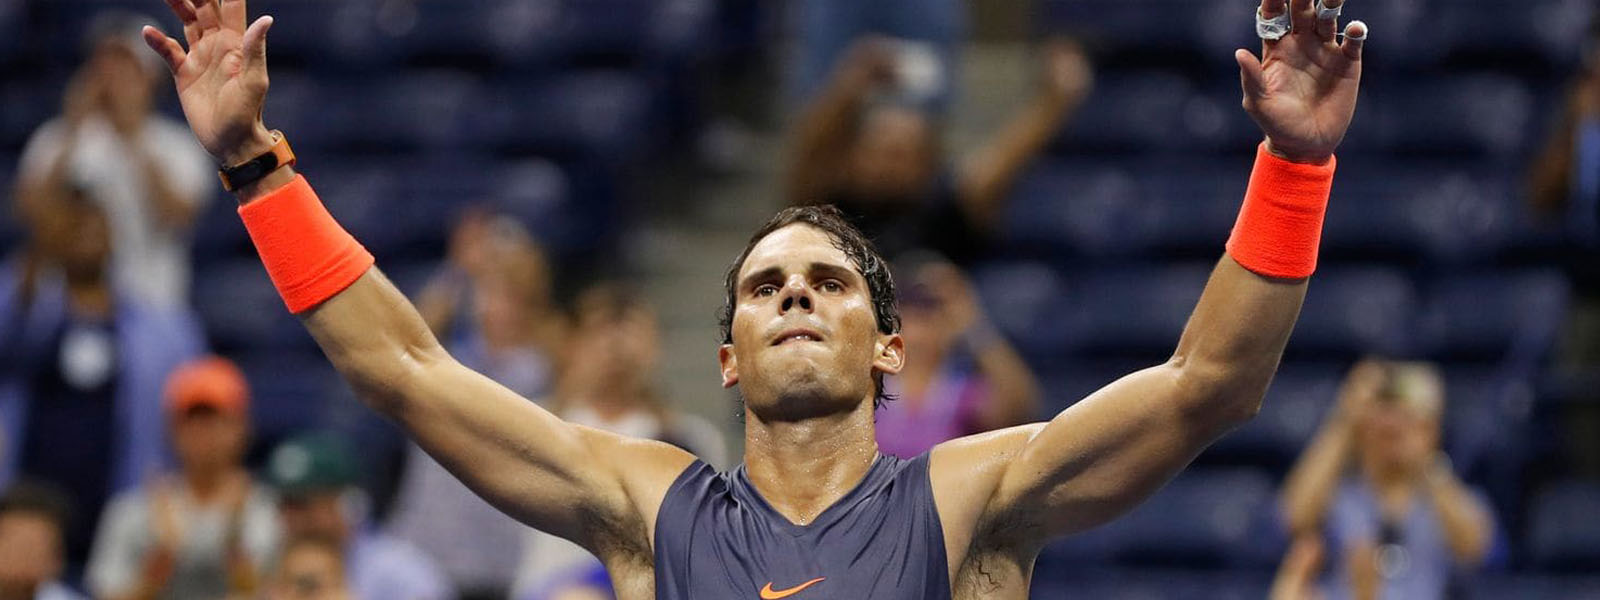 Nadal through, Nishikori out at Indian Wells